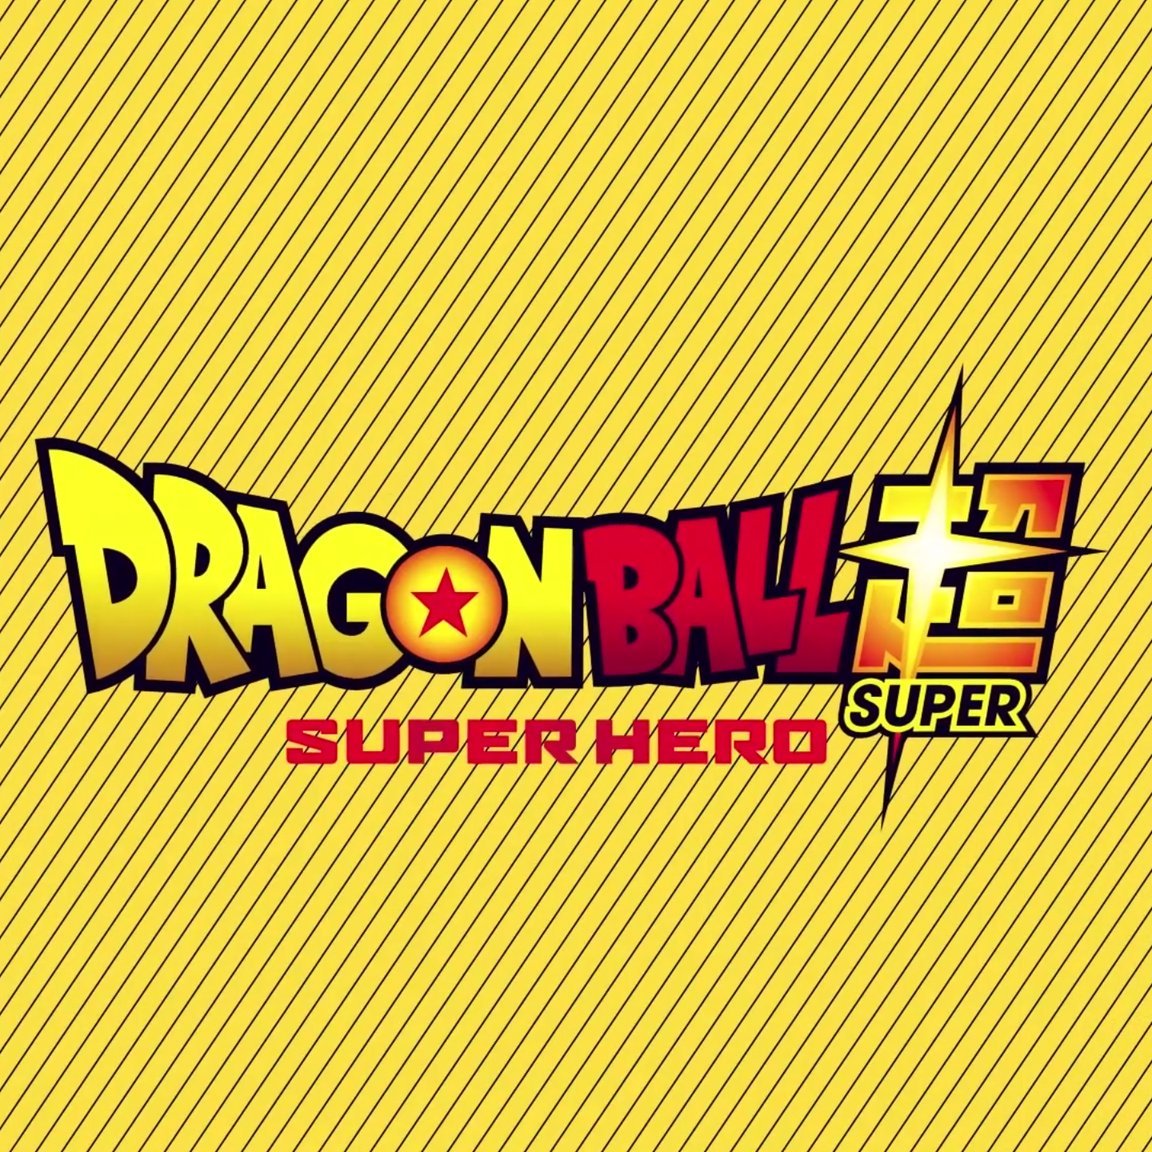 Fandom Dragon Ball Super Super Hero Film Title Announced Along With First Look Pics Hitting Theaters 22 T Co Liqj2irdkt Twitter